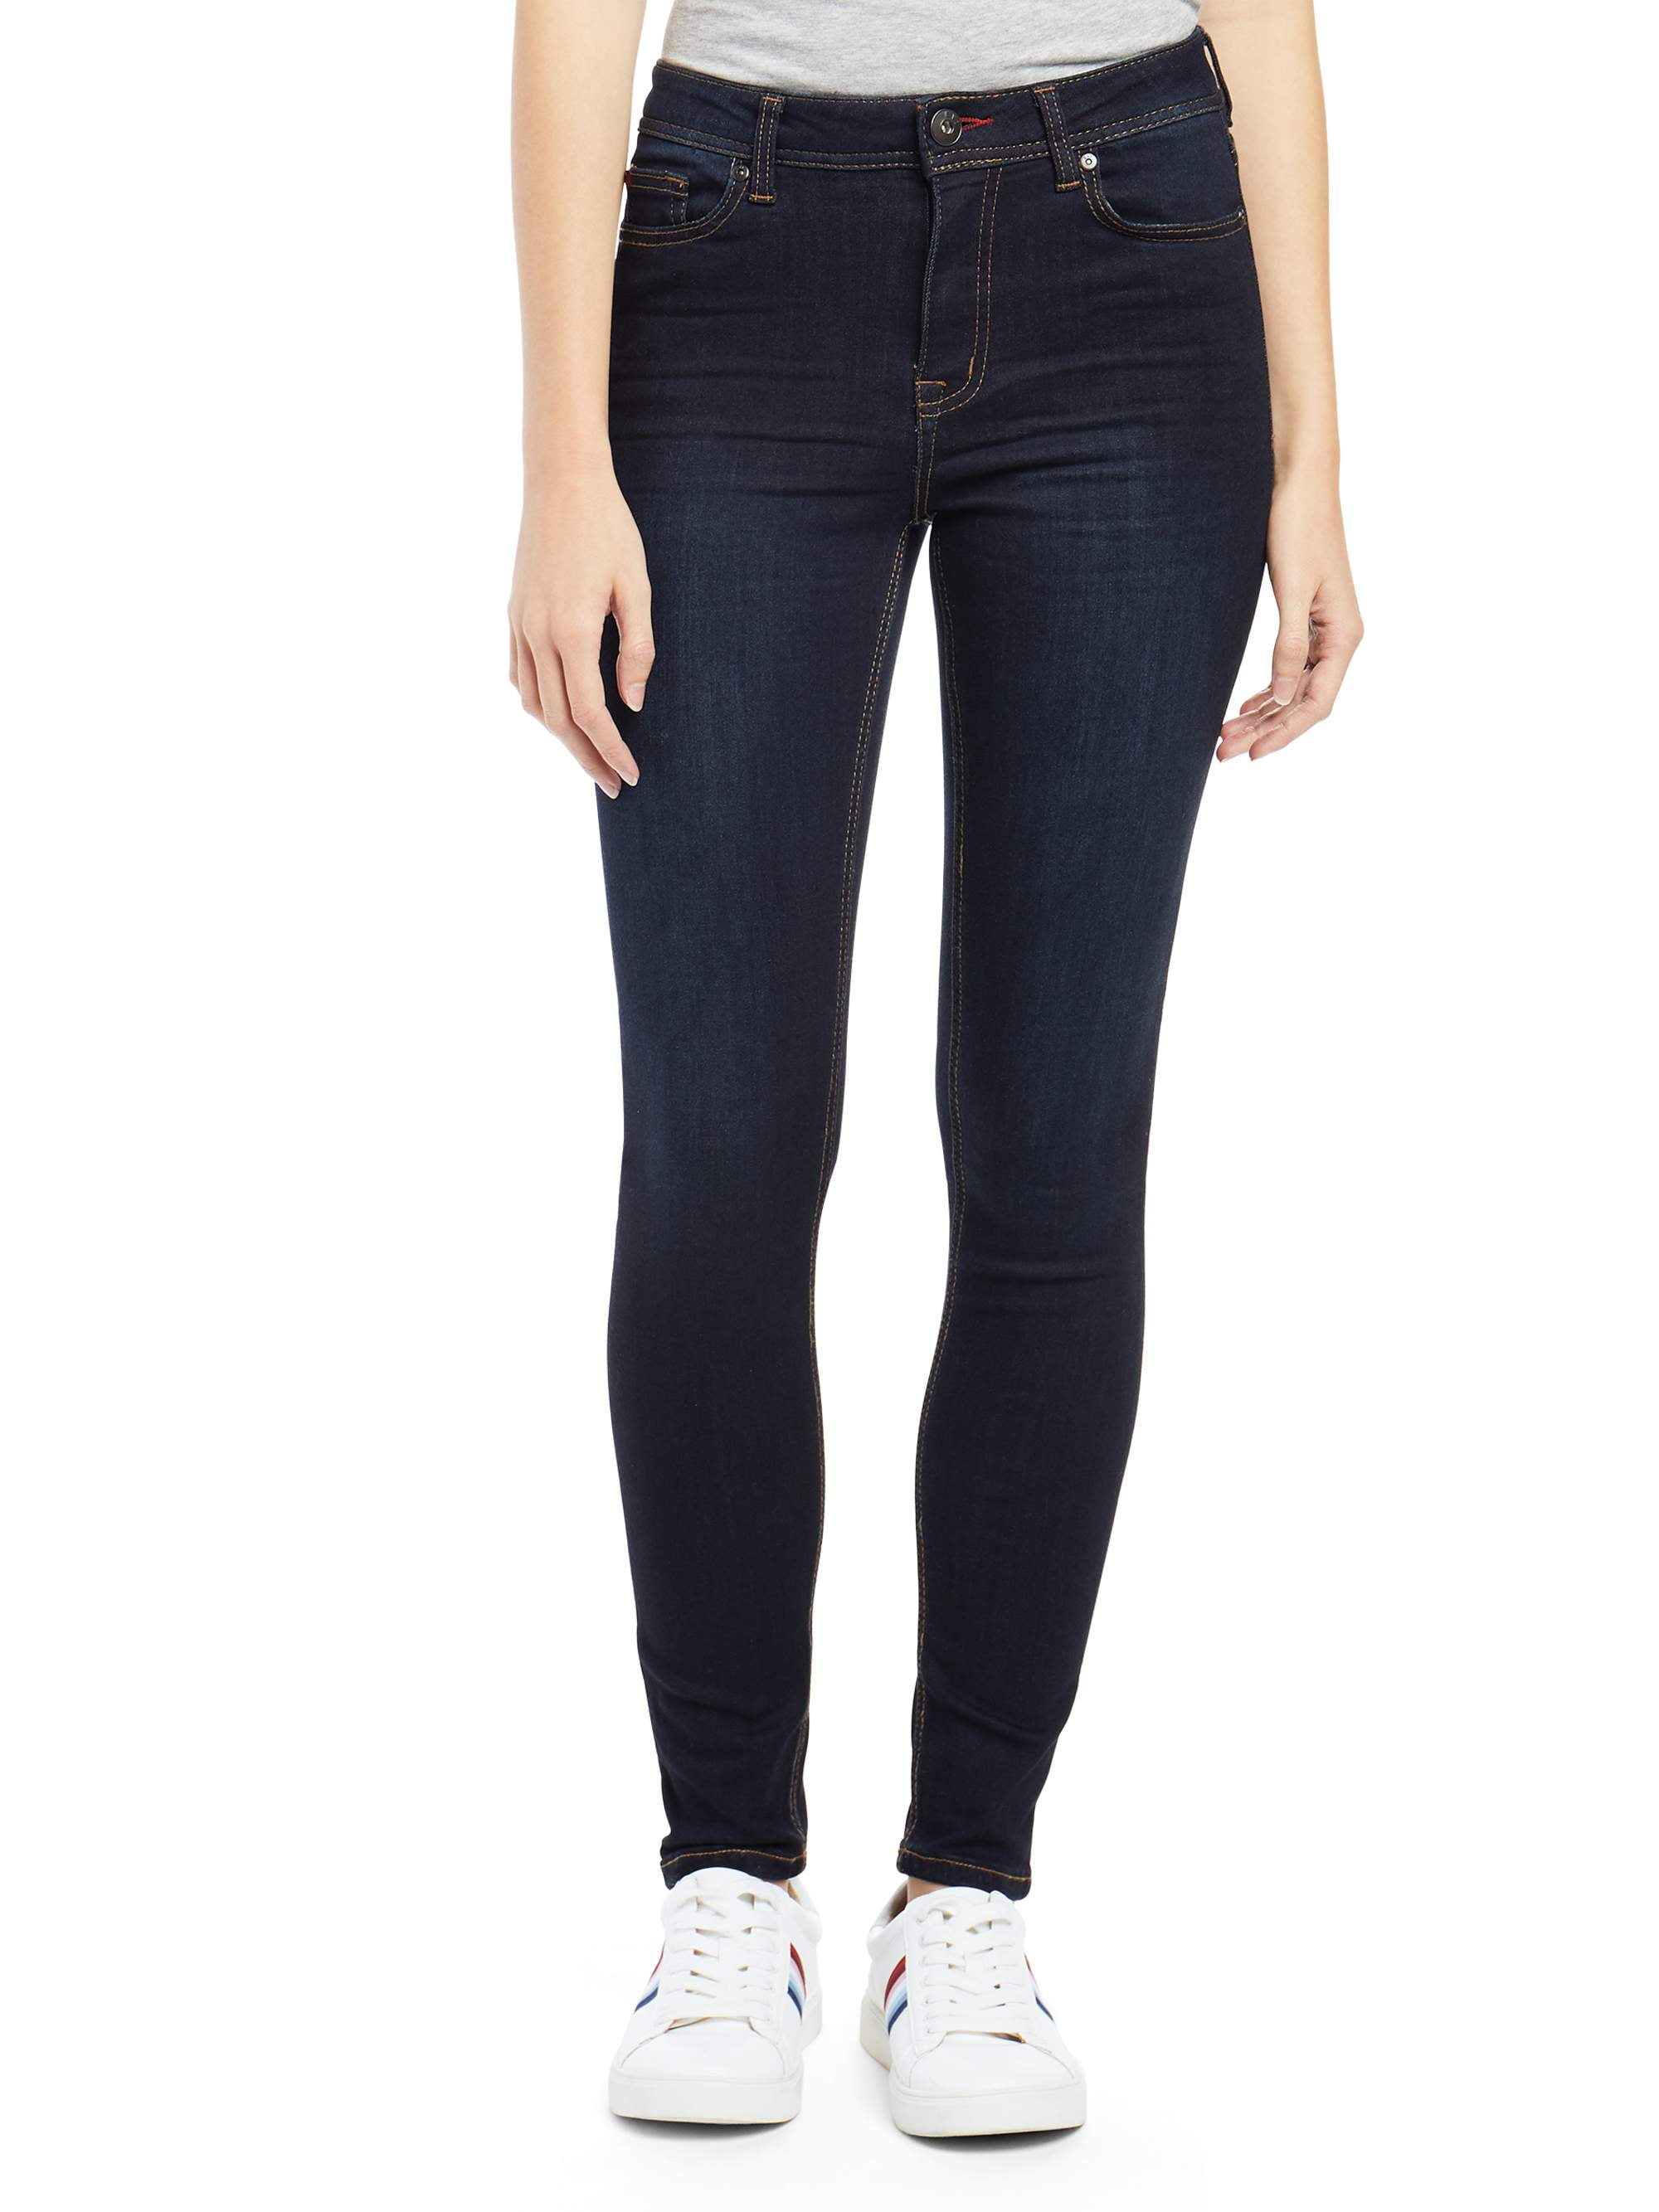 walmart women's high rise jeans